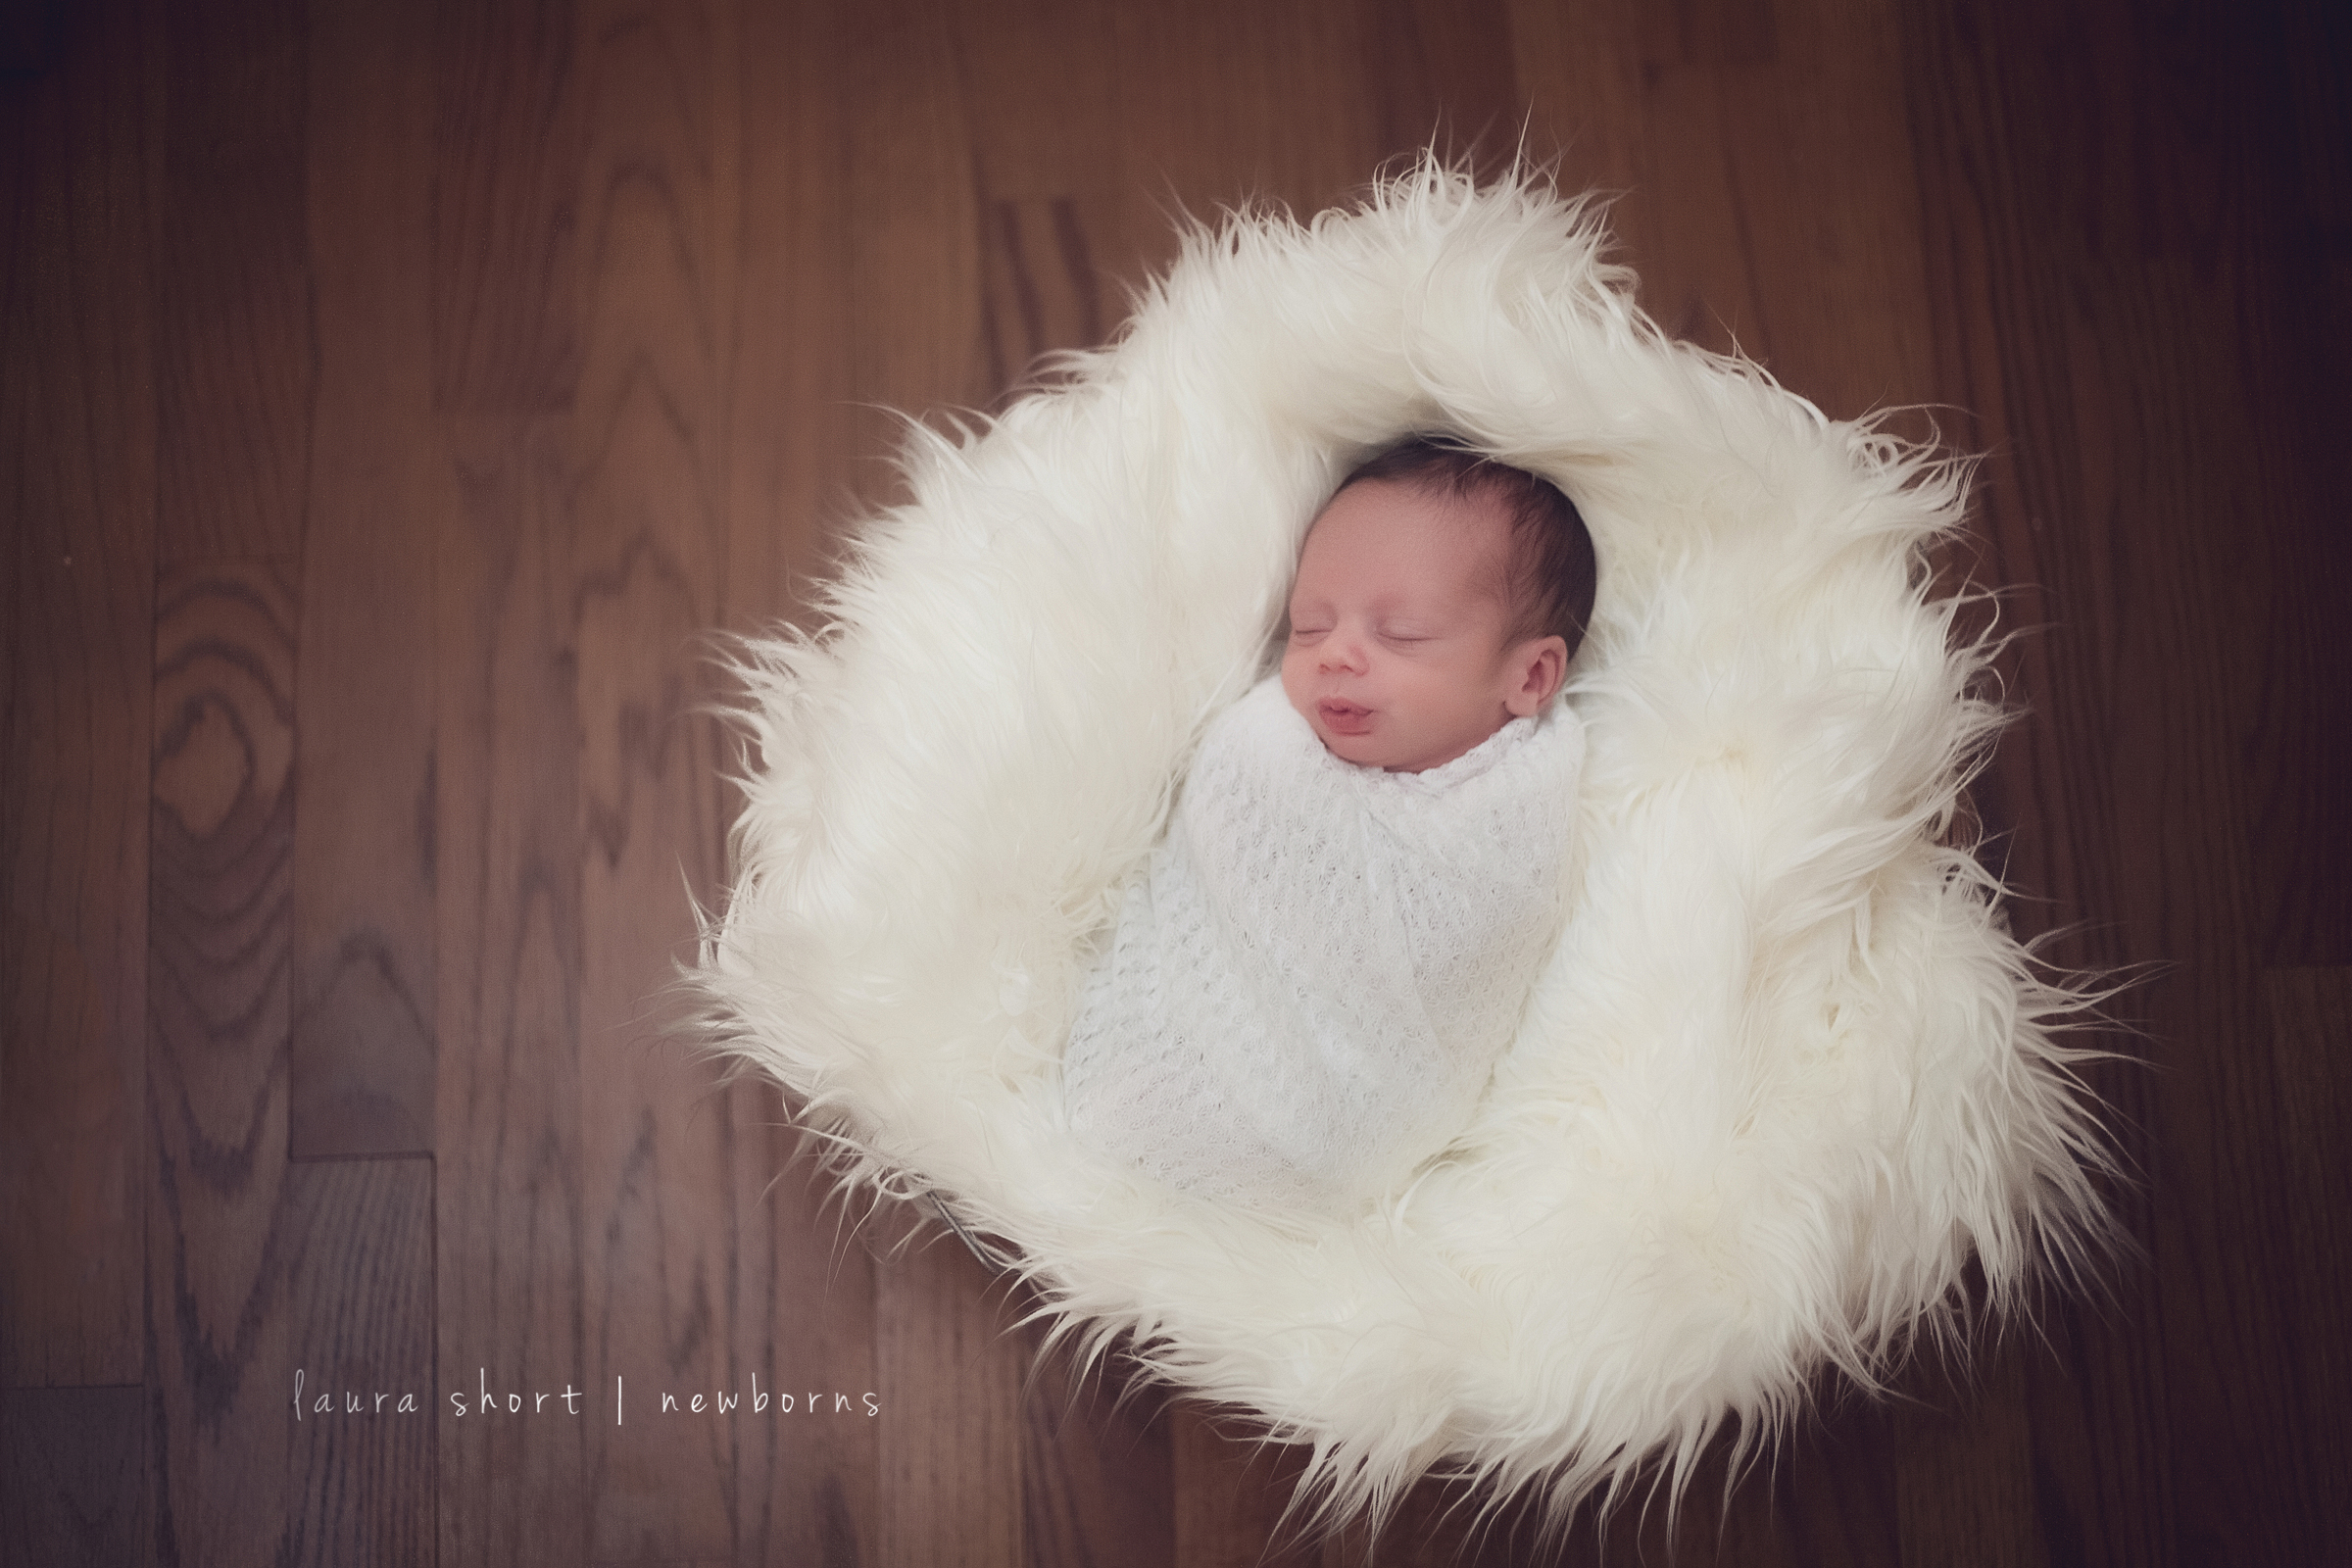 arnold-newborn-photographer